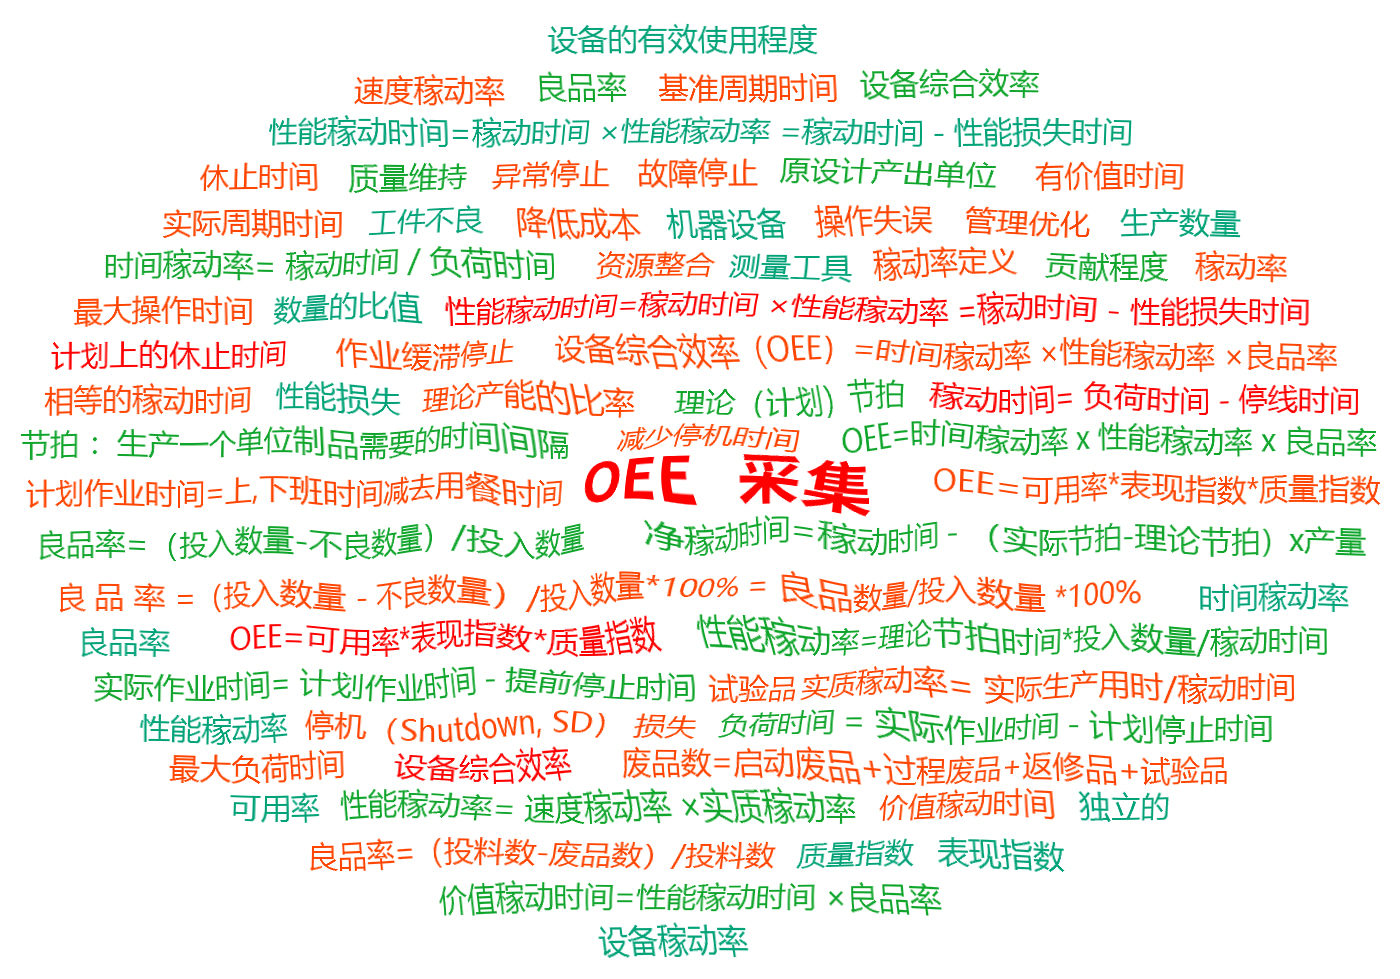 OEE报表 OEE数据统计 OEE统计 OEE管理 OEE设备管理